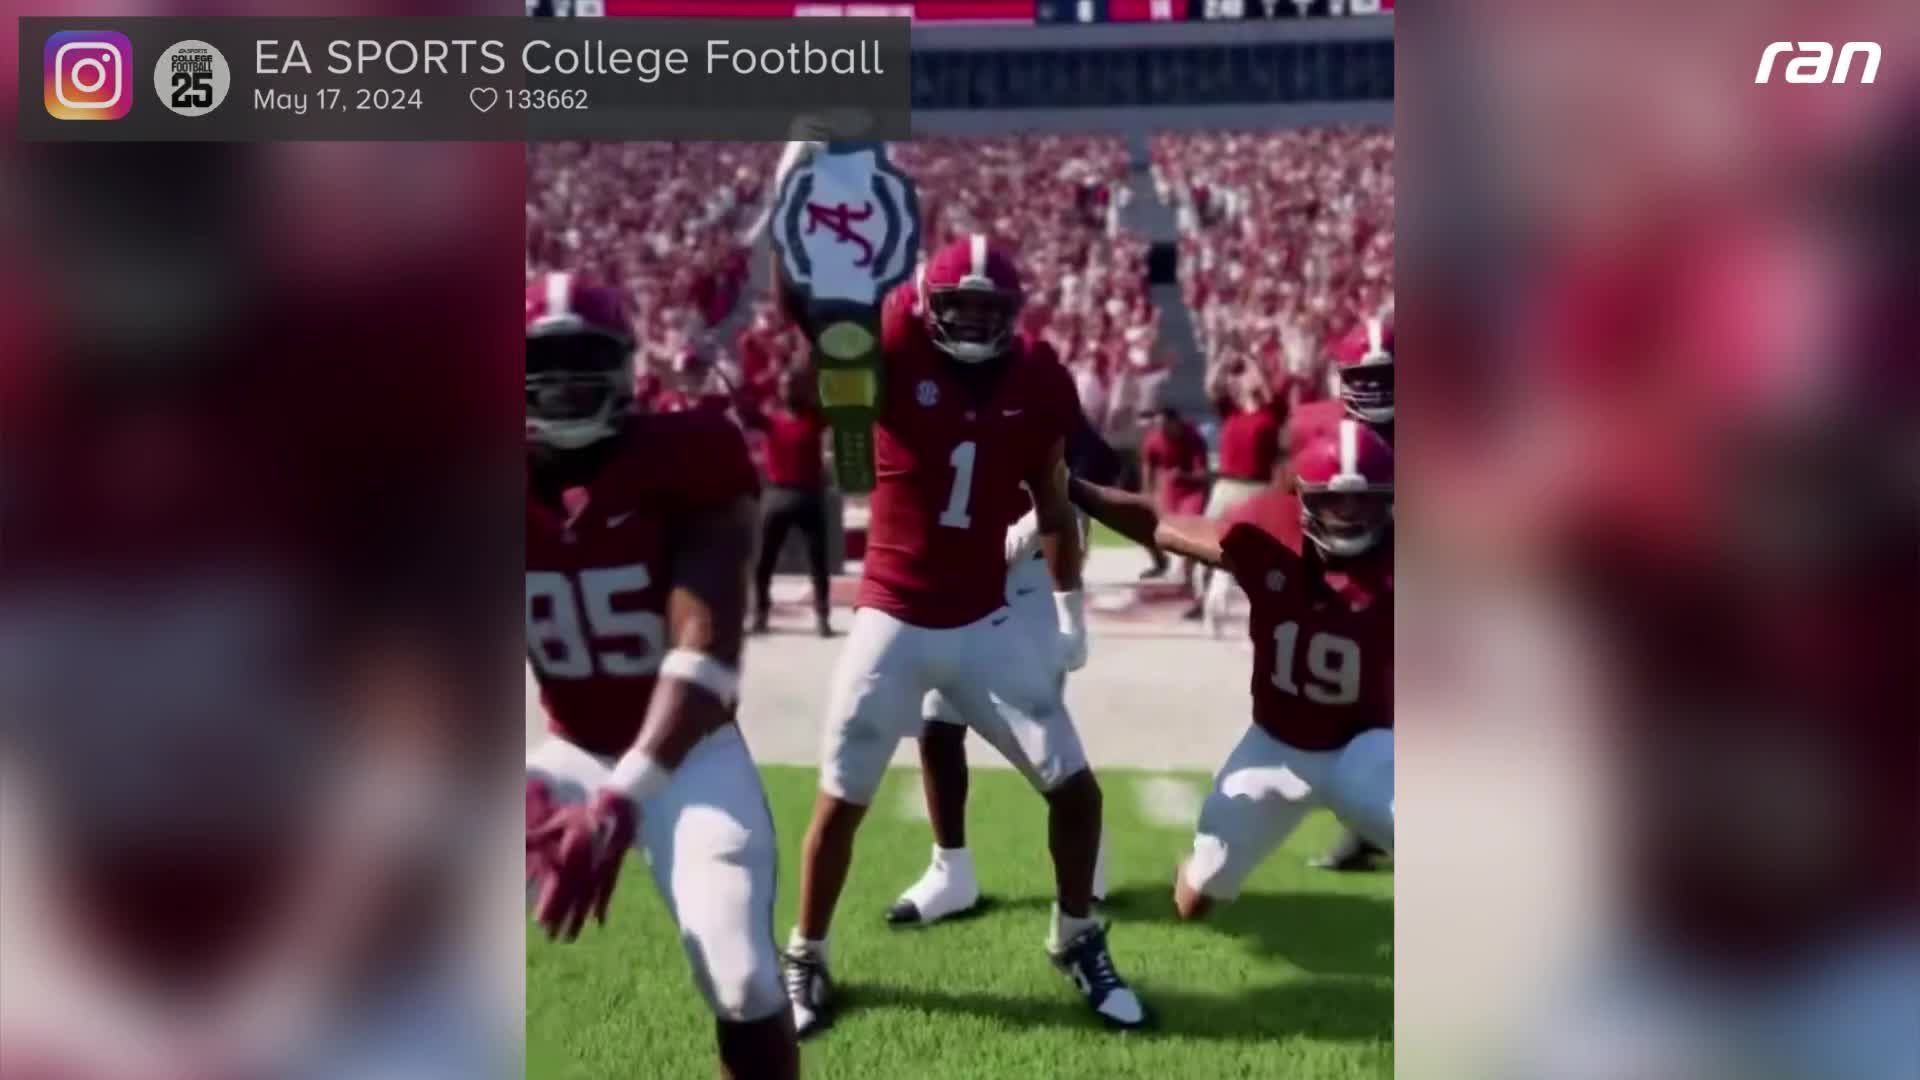 Trailer zu EA Sports College Football 25: Der Hype ist real!